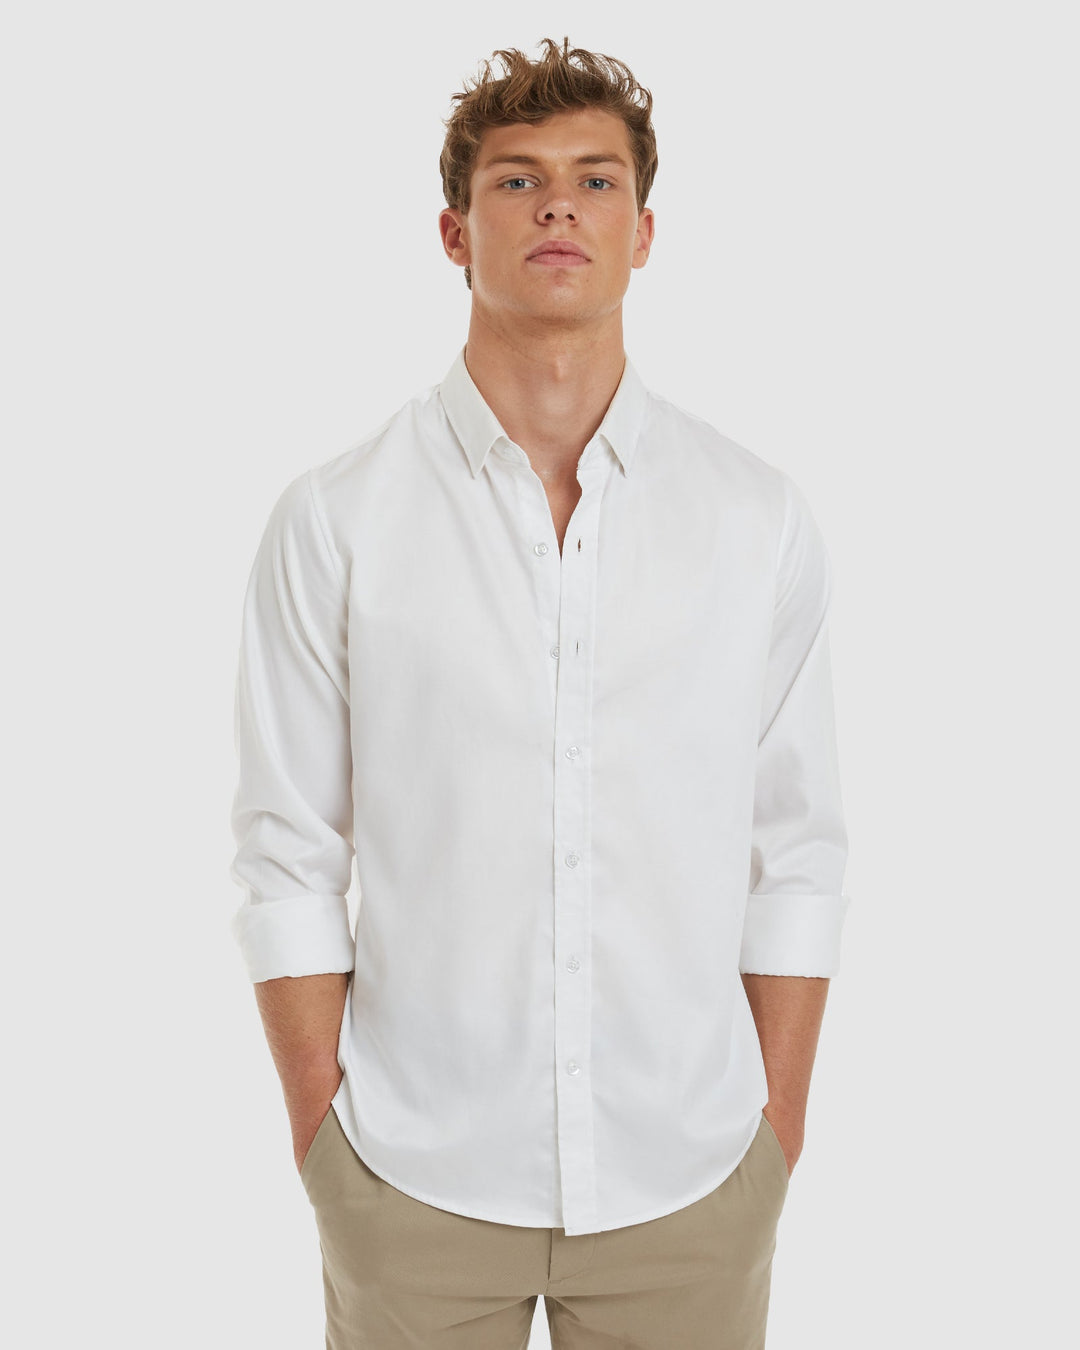 London Formal White Shirt - Non Iron Slim Fit –